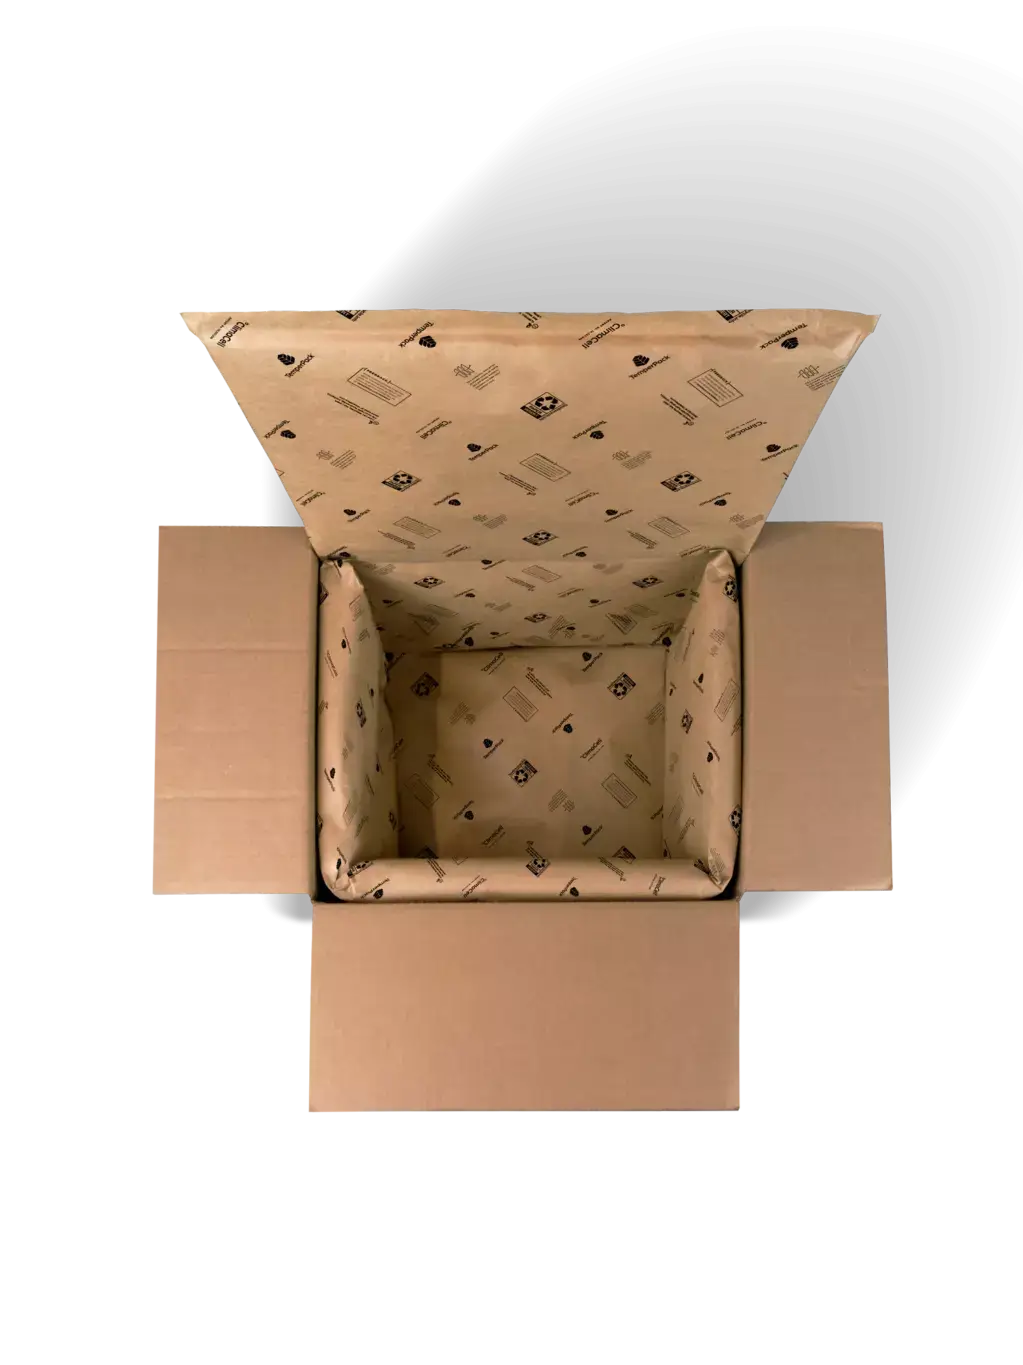 ClimaCell inside cardboard box